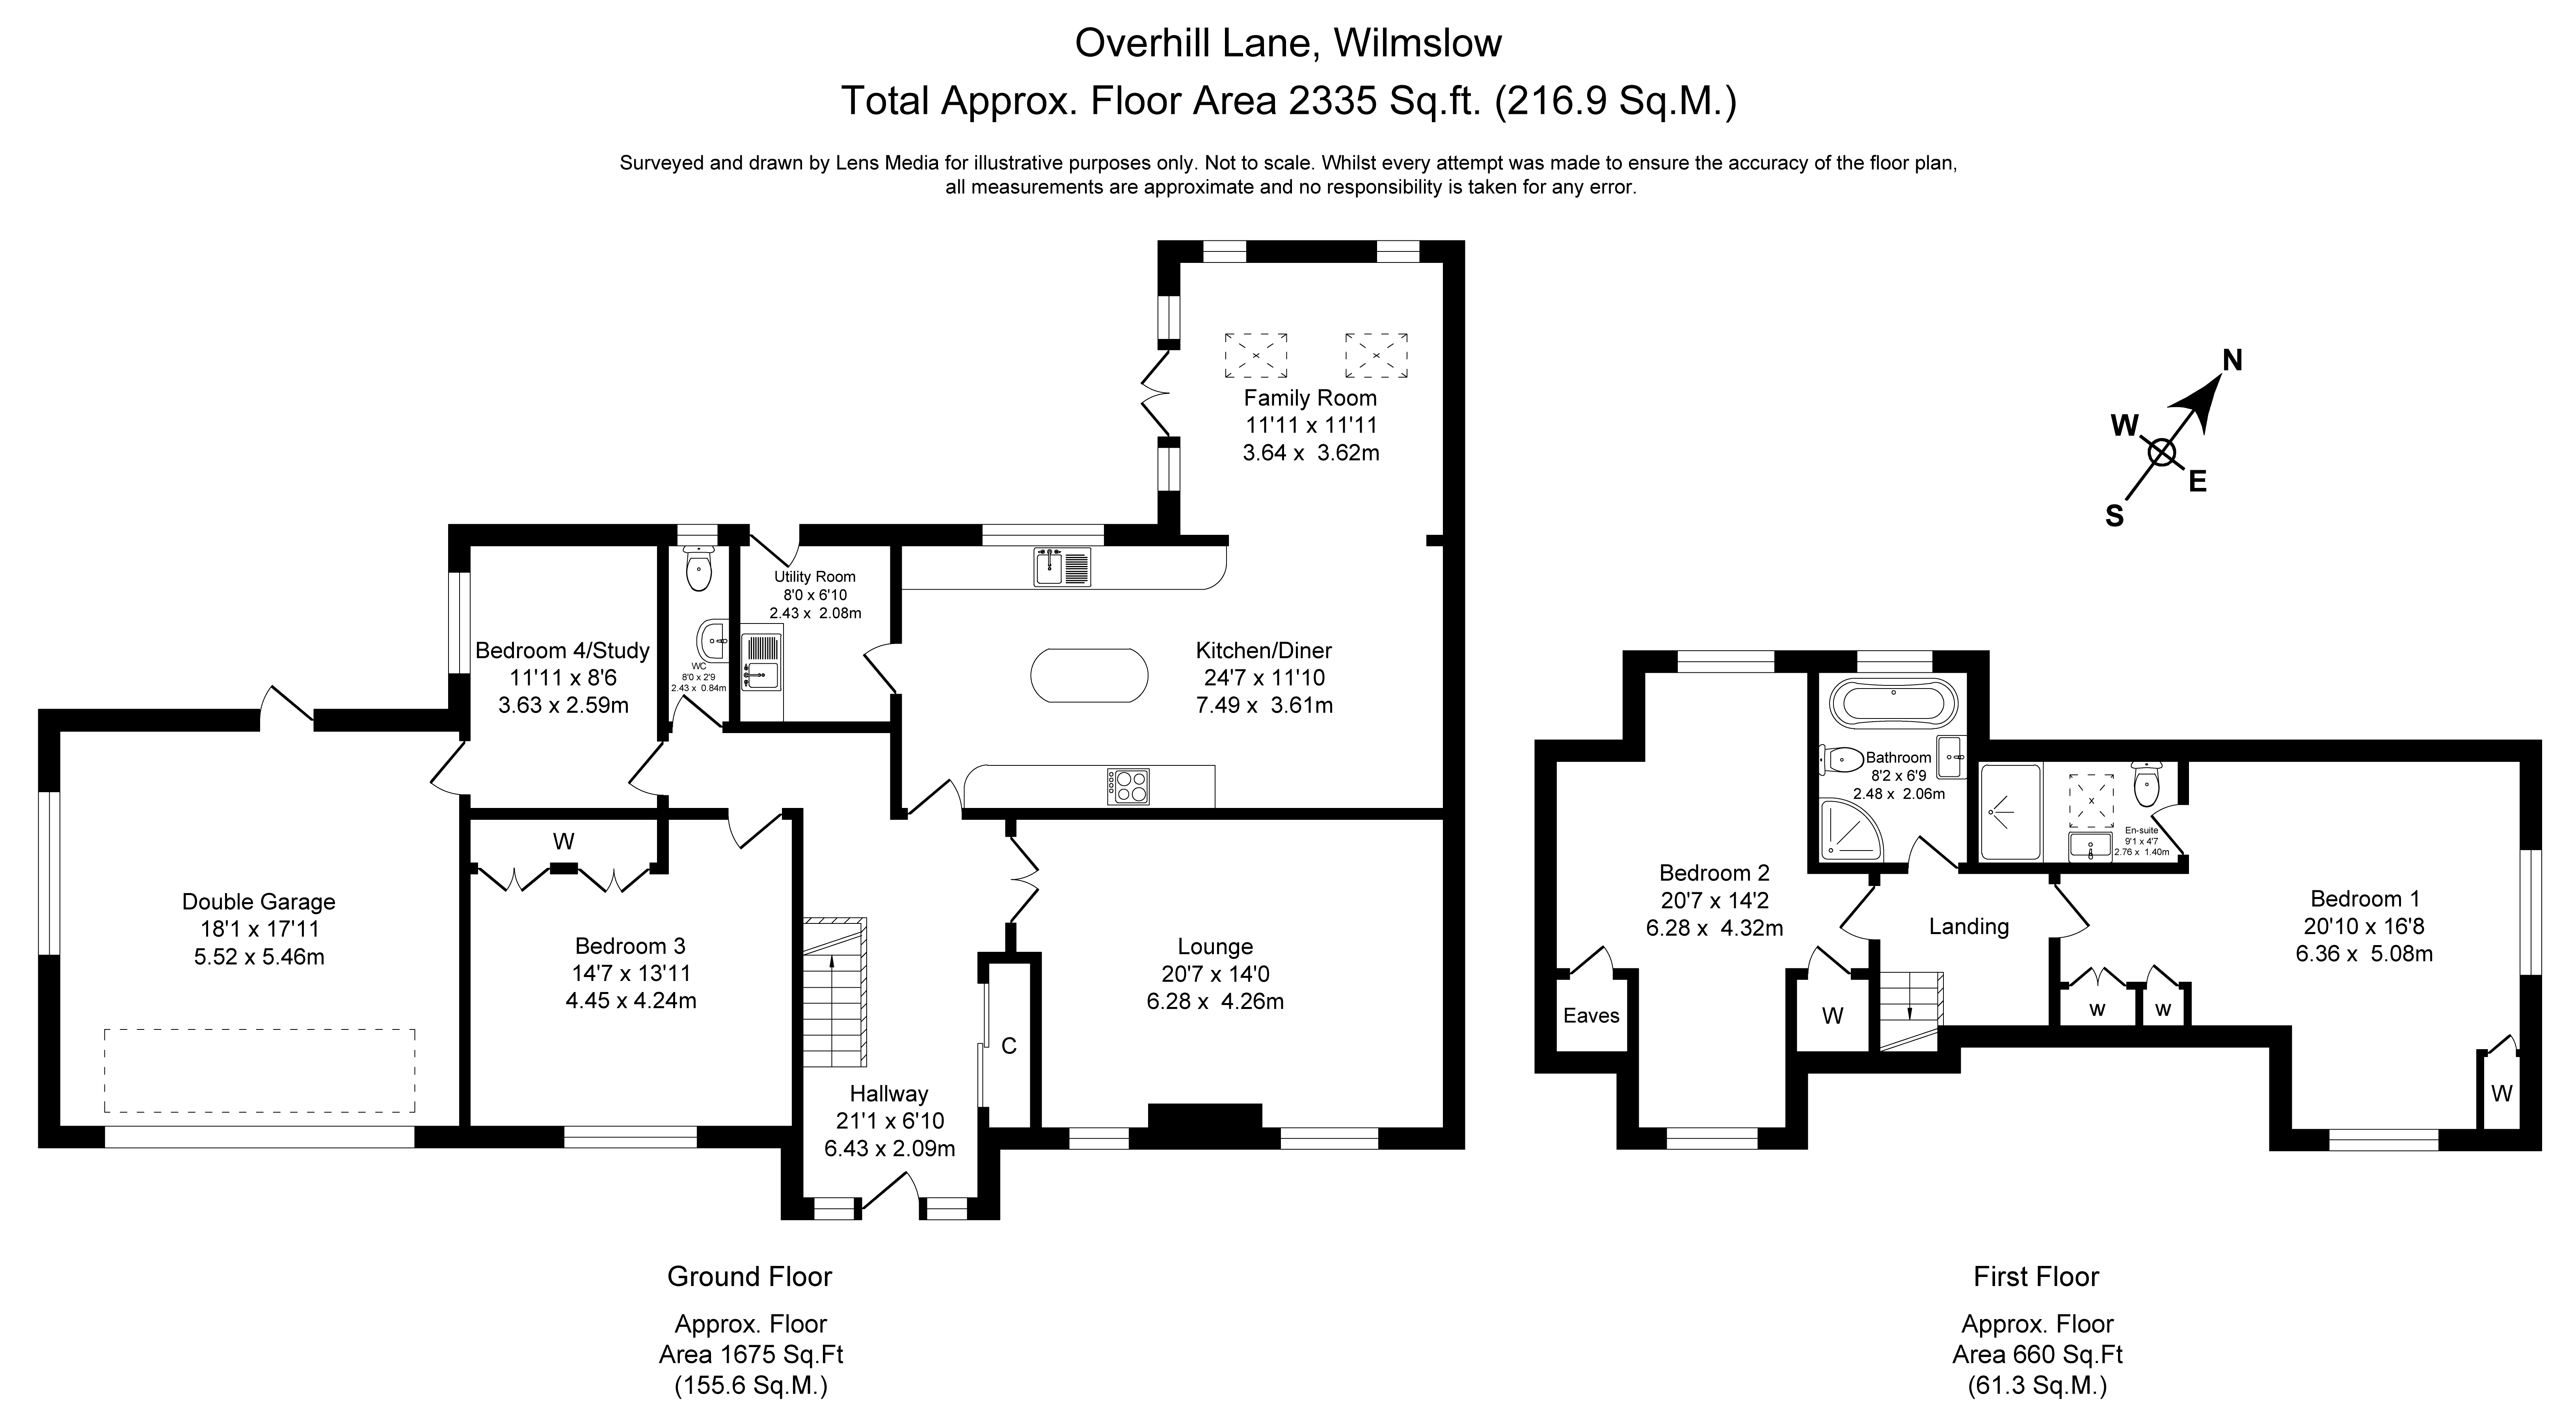 Floorplans For Overhill Lane, Wilmslow, Cheshire